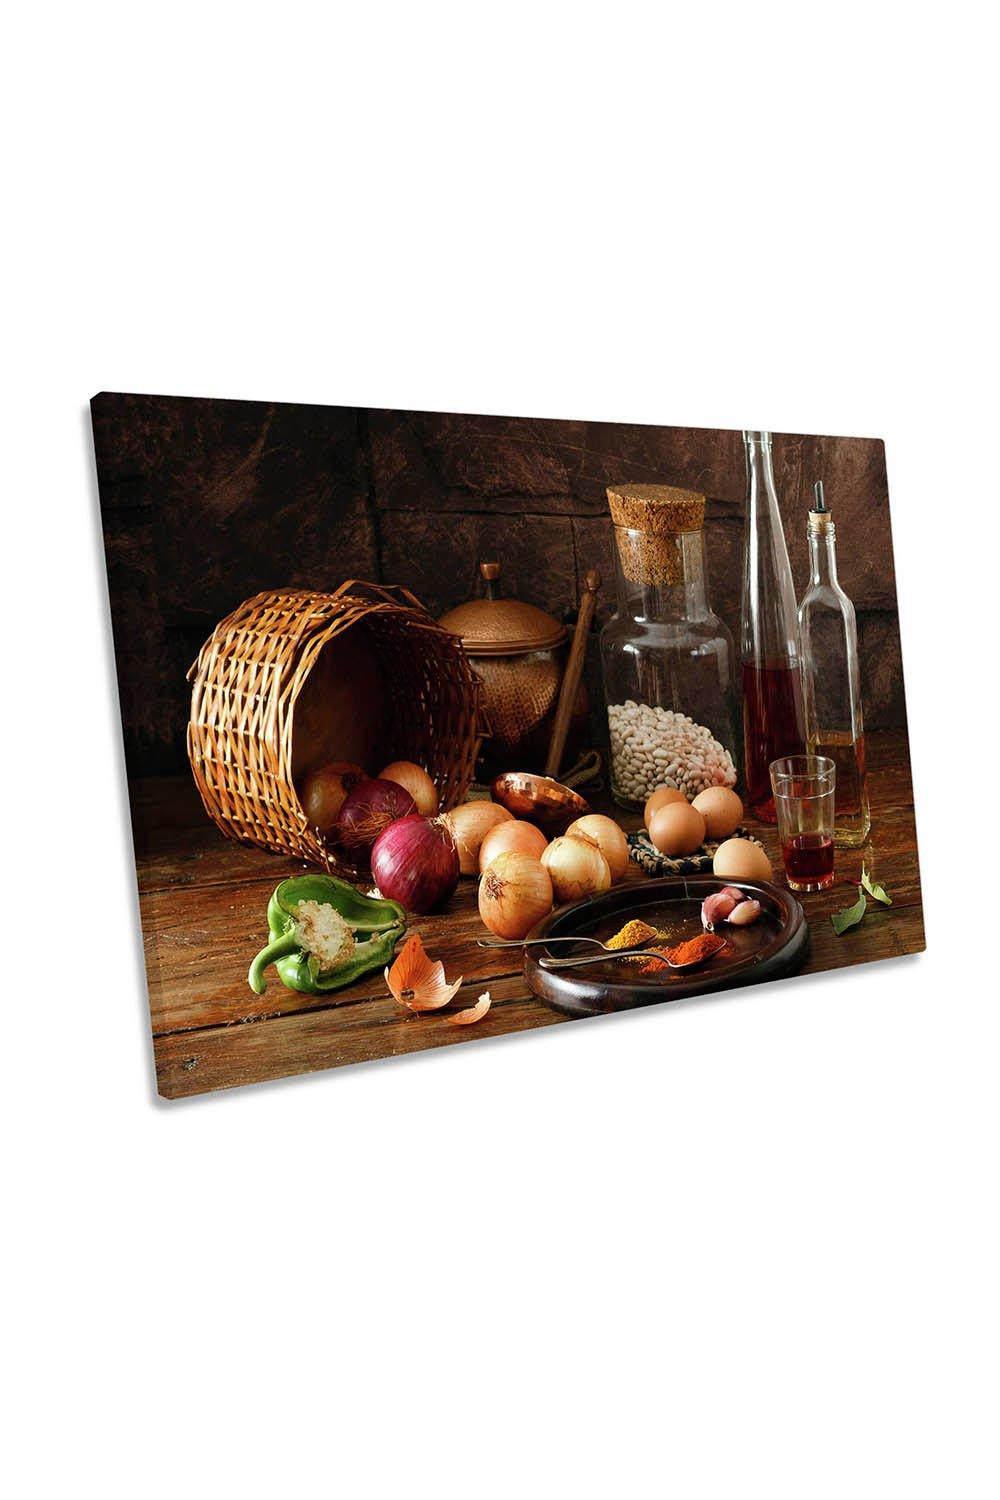 Food Ingredients Basket Kitchen Brown Canvas Wall Art Picture Print